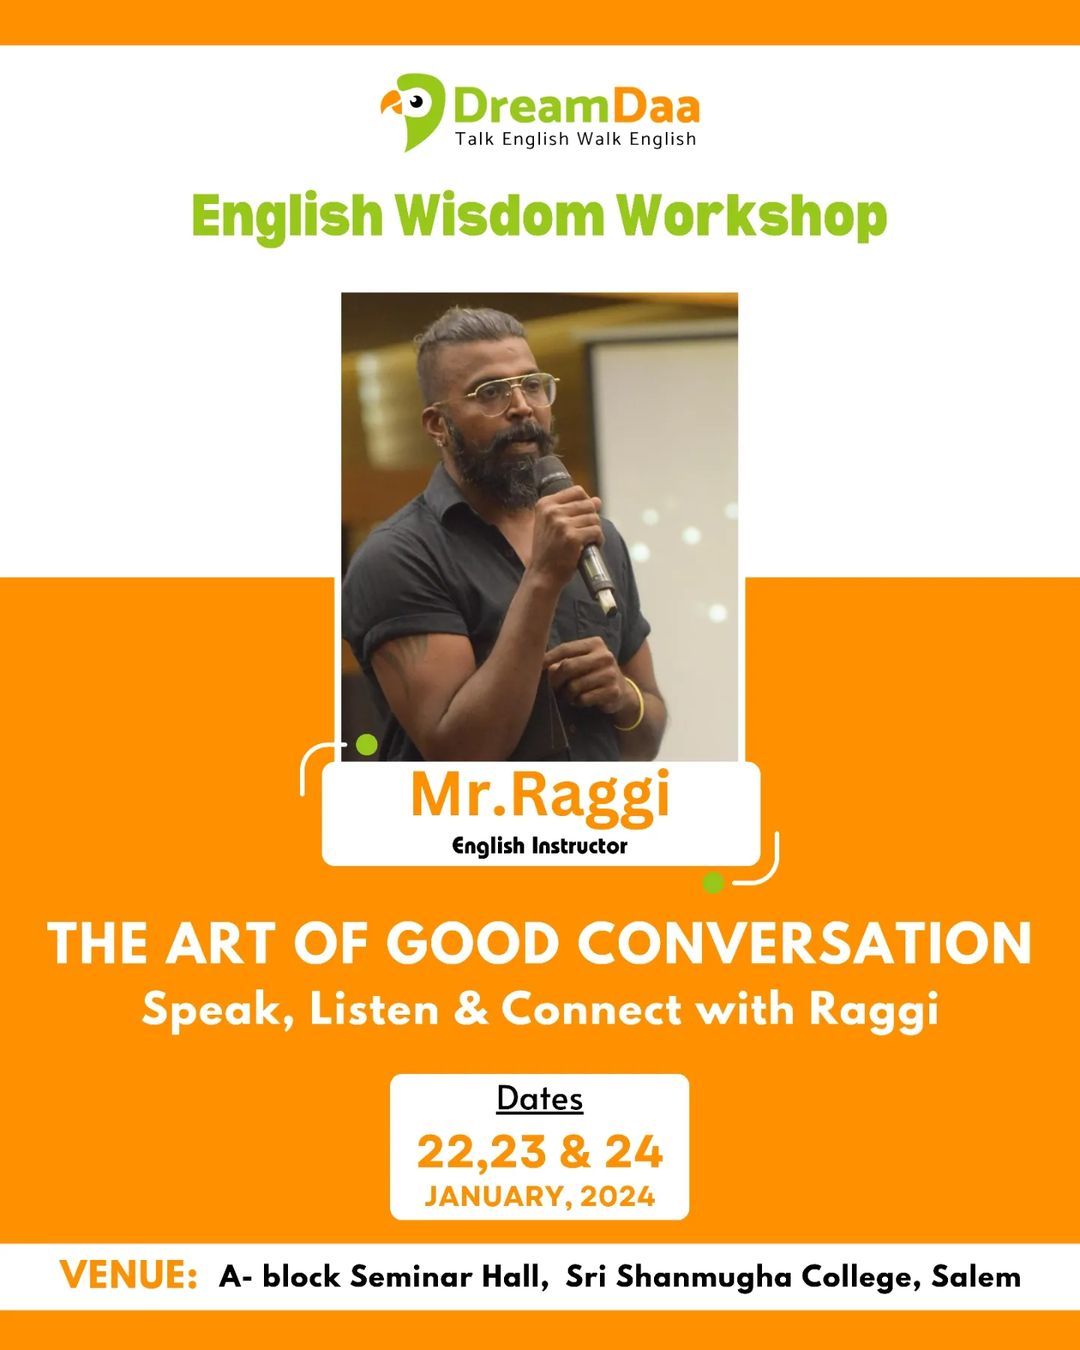 DreamDaa - English Wisdom Workshop📖
English Instructor - Mr.Raggi😎
The Art...